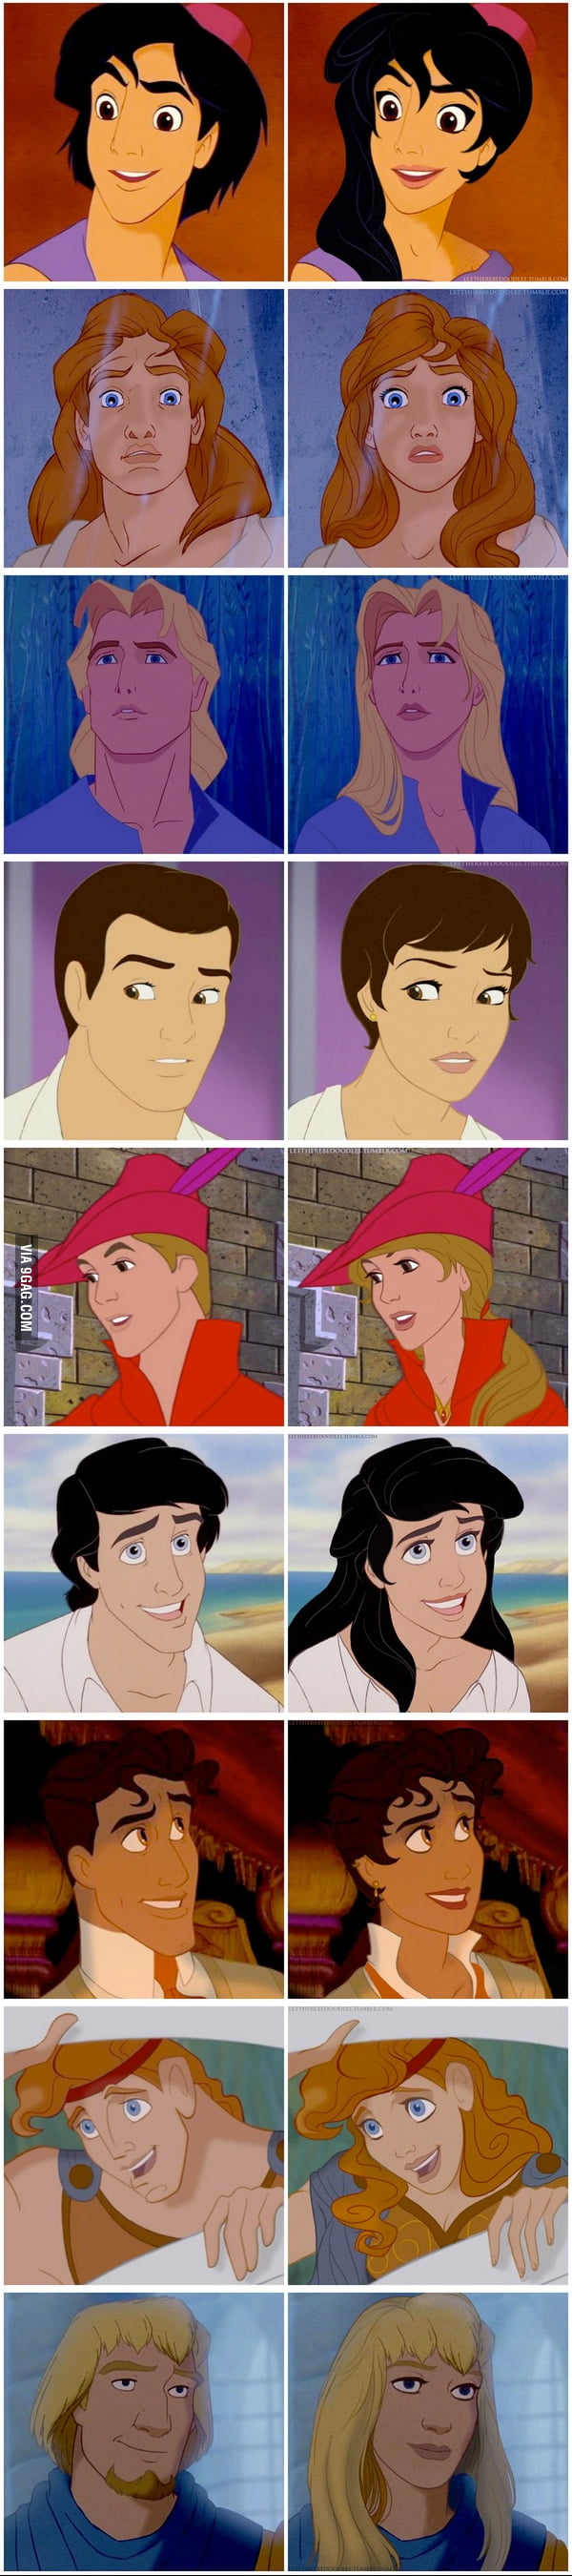 Genderbent Disney Princes 9gag